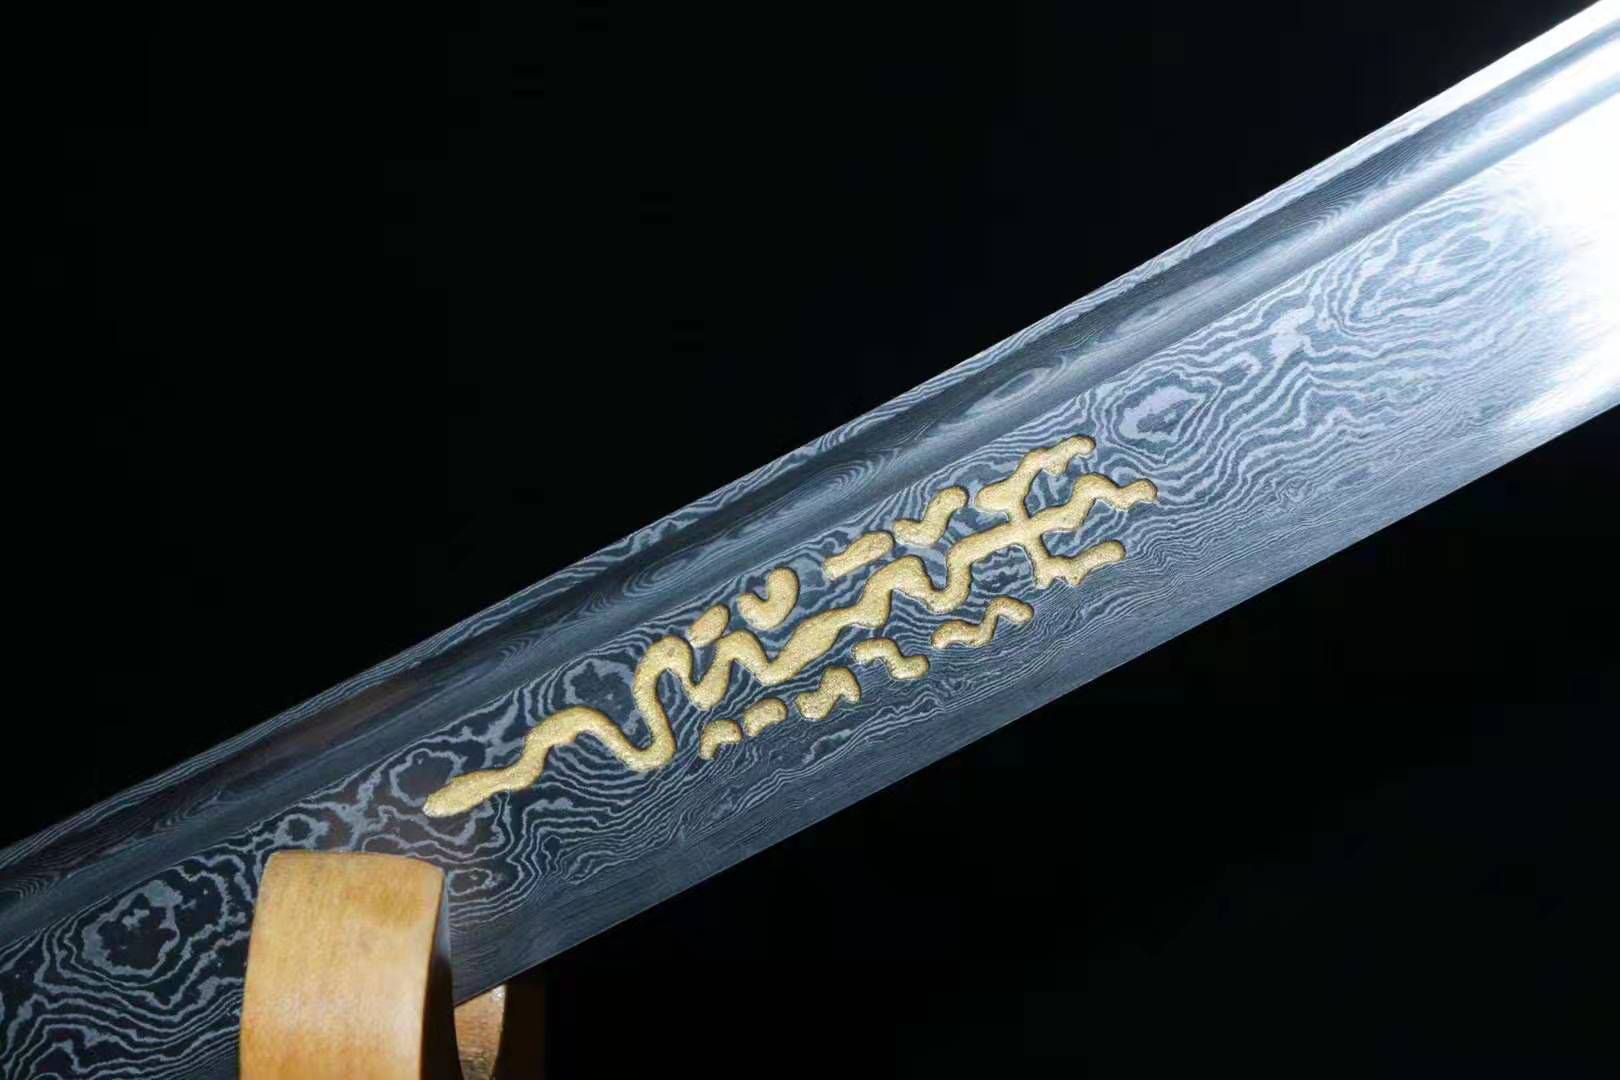 The Kokitei Handmade Chinese Dao Pattern Steel-Romance of Men